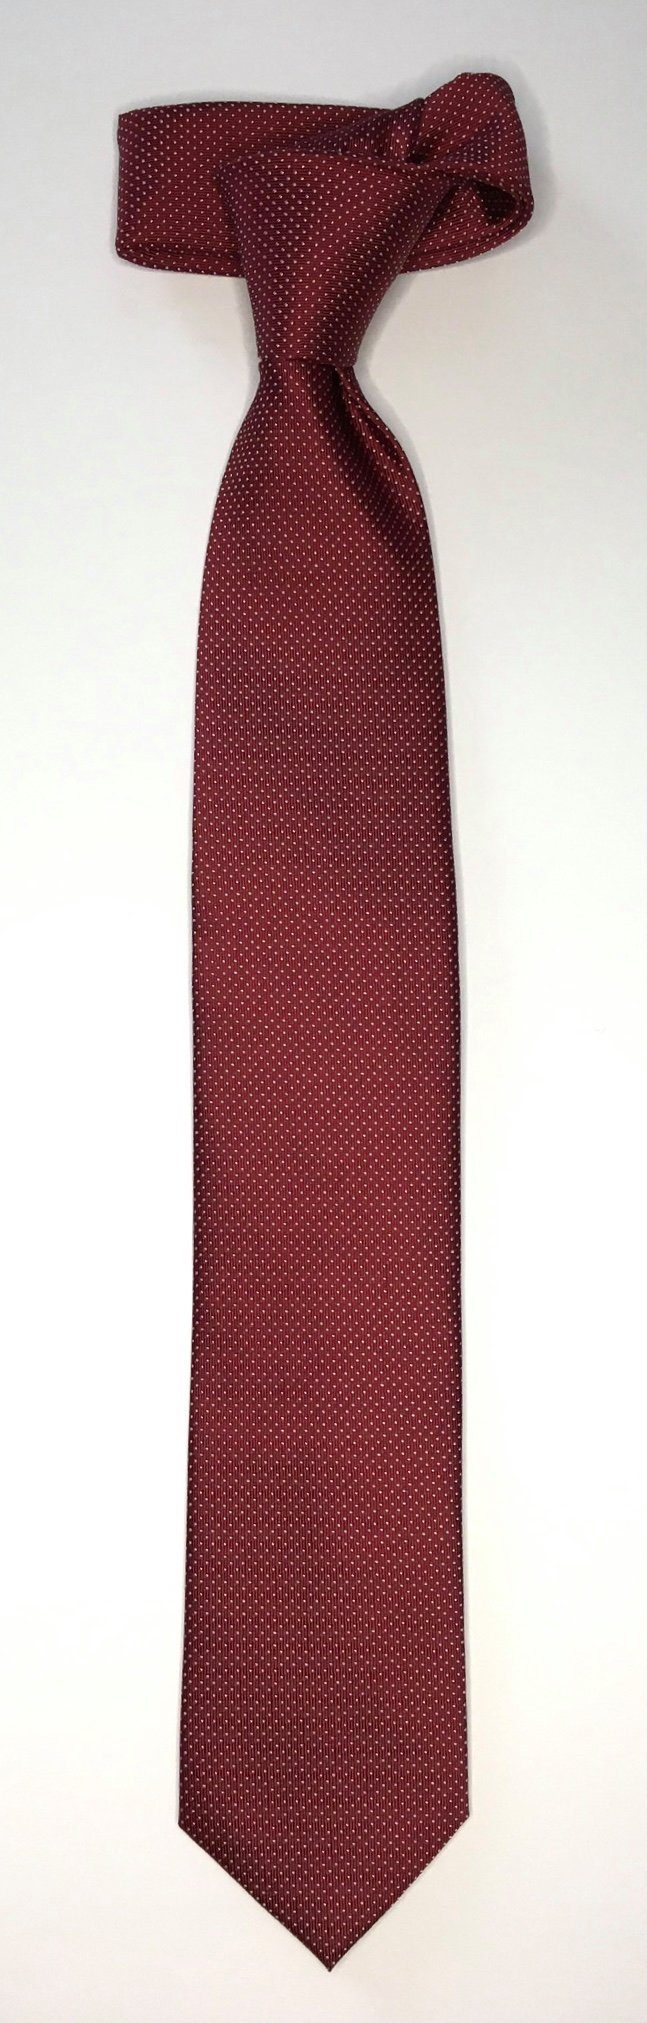 Seidenfalter Krawatte Seidenfalter 6cm Picoté Seidenfalter im Krawatte Krawatte Design Bordeaux edlen Picoté